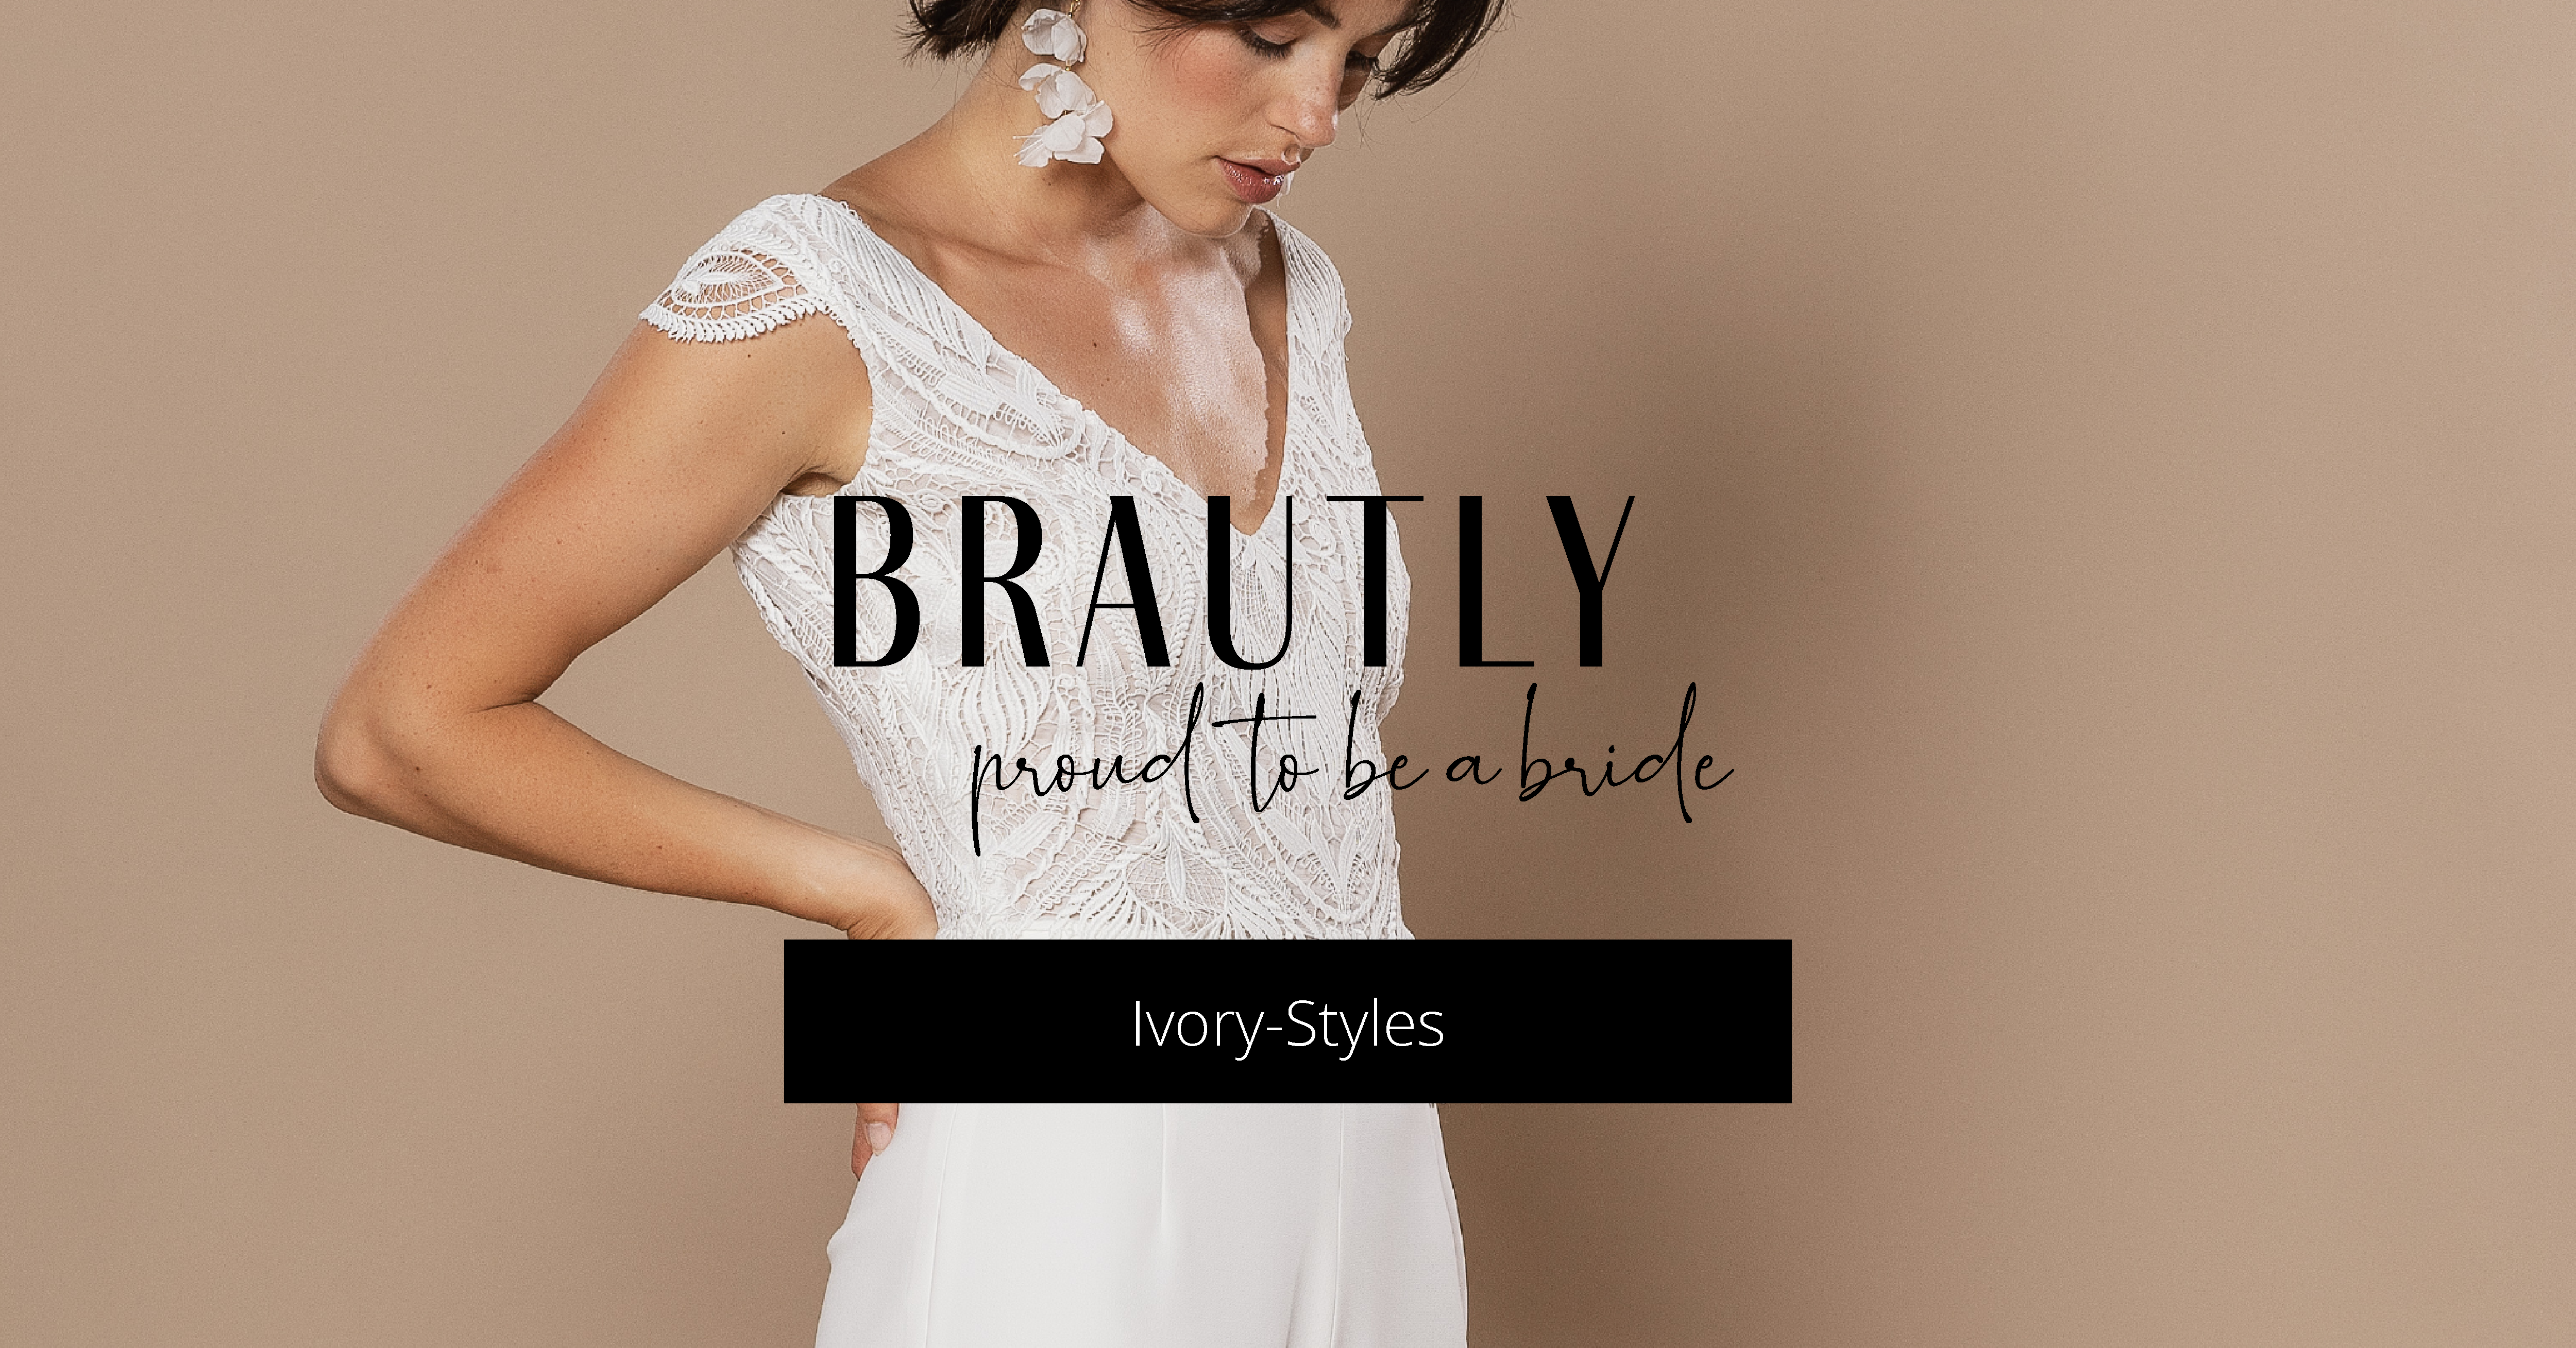 Ivory Styles von Brautly